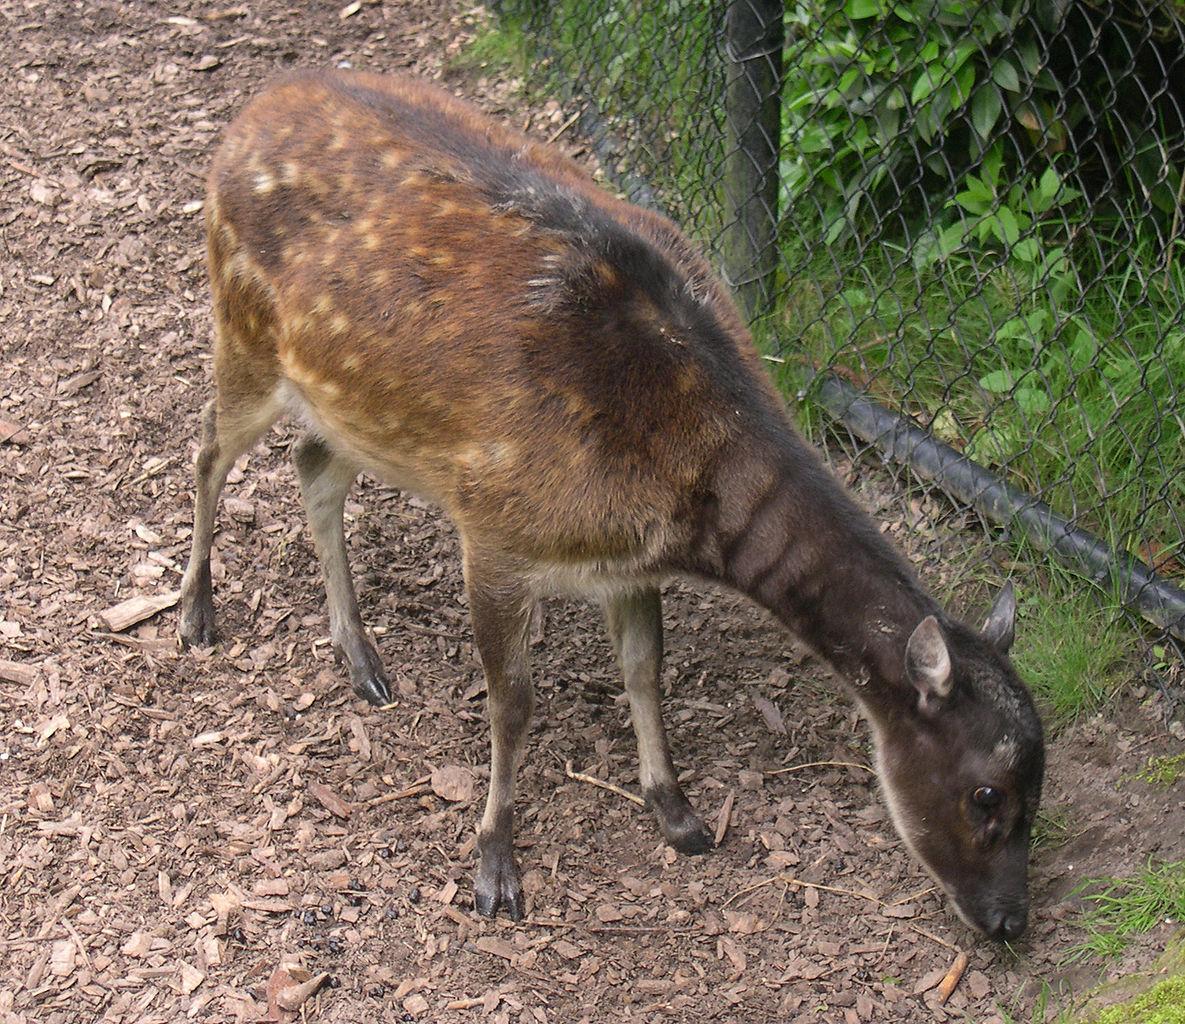 The Visayan Spotted Deer